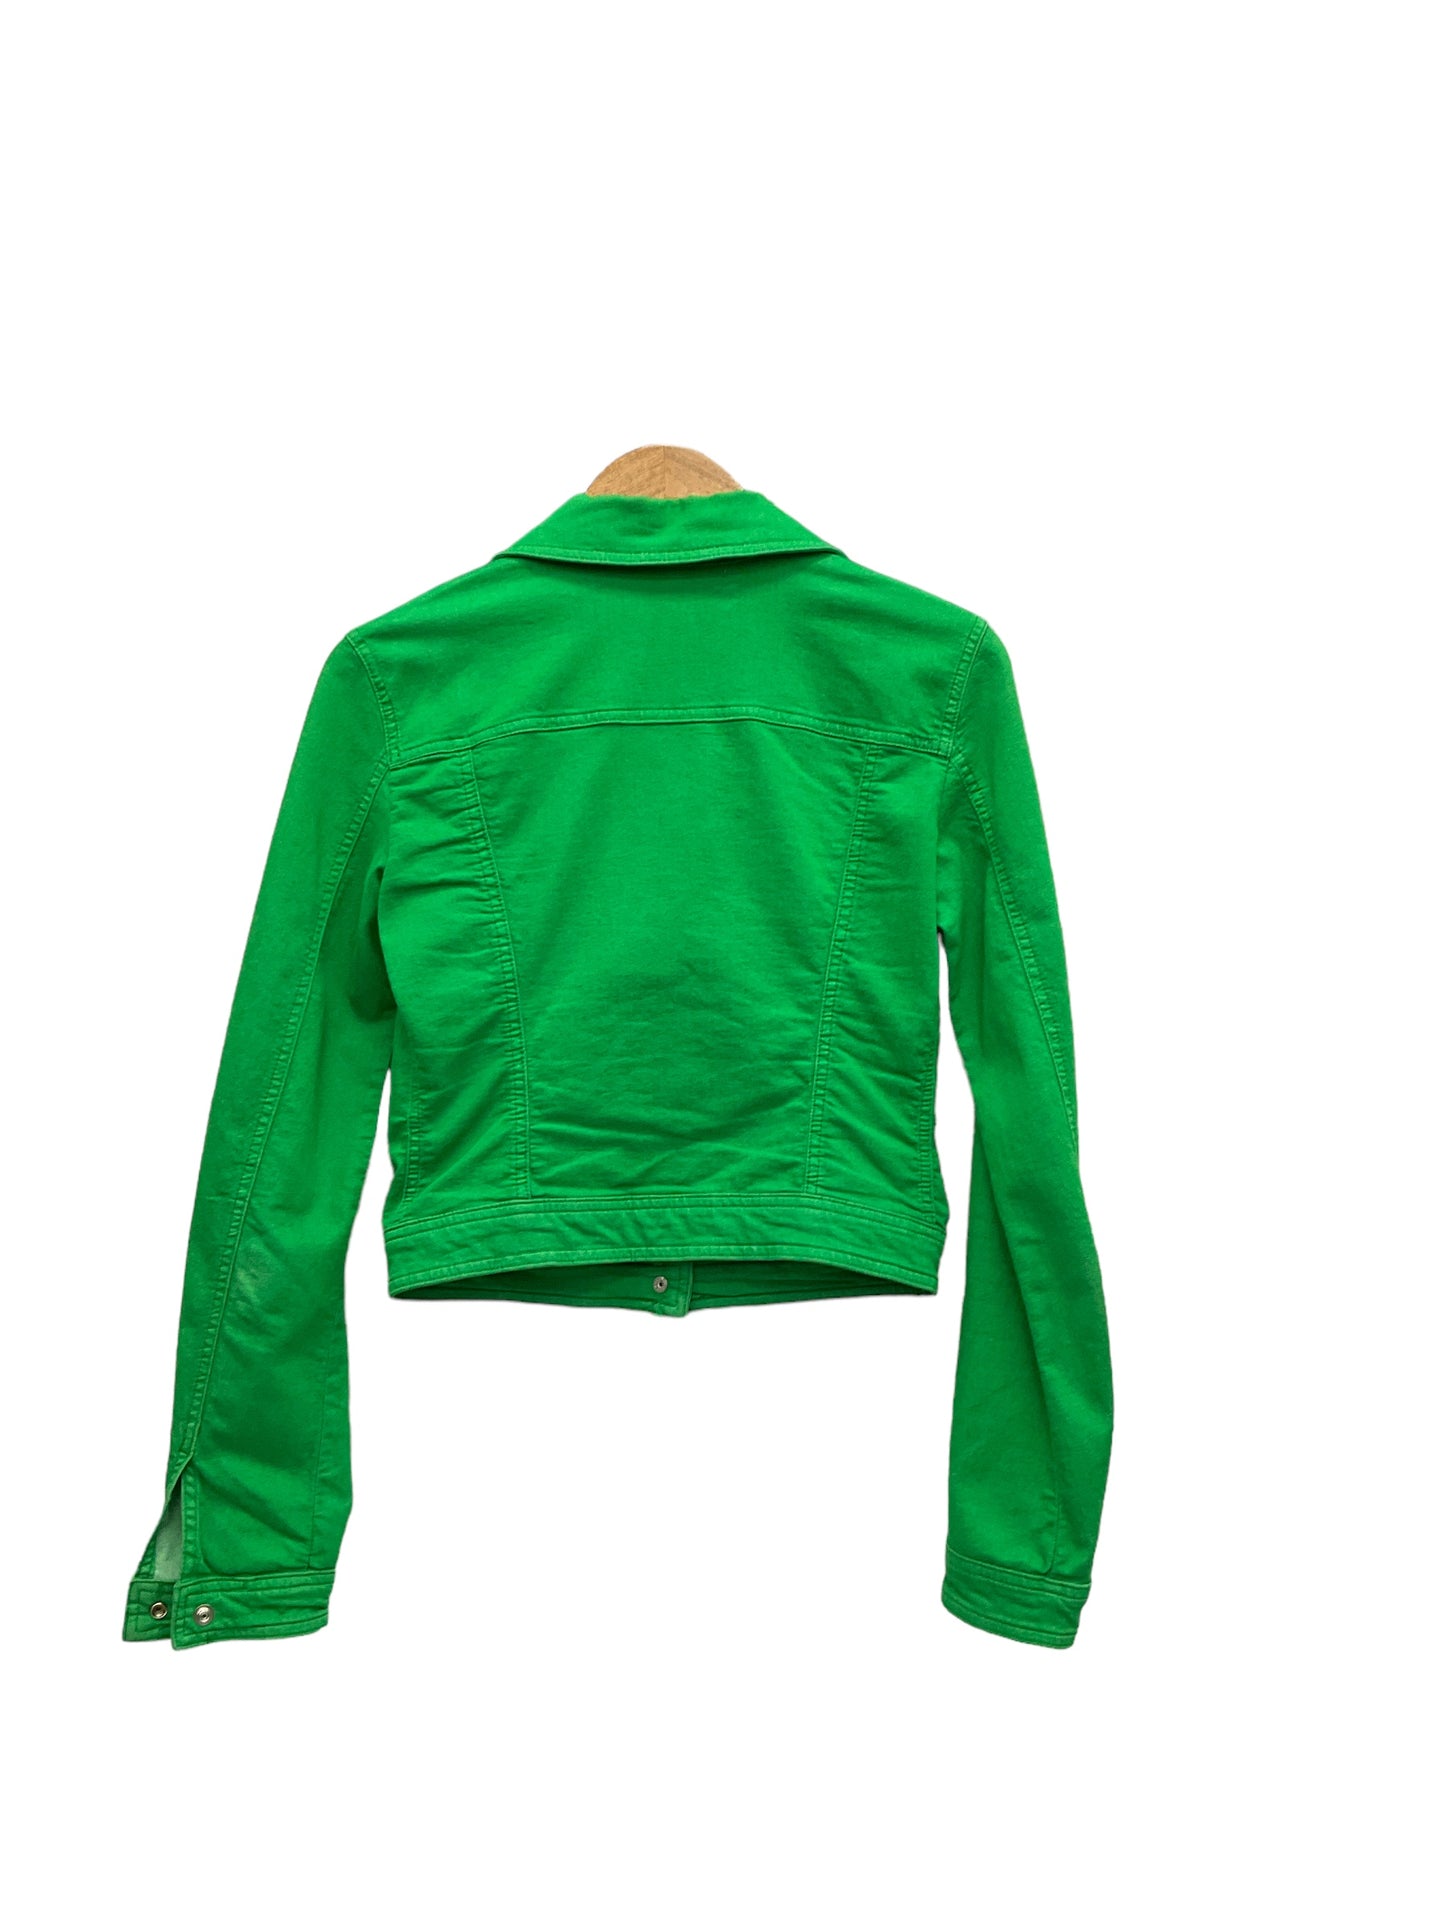 Jacket Denim By Benetton  Size: M